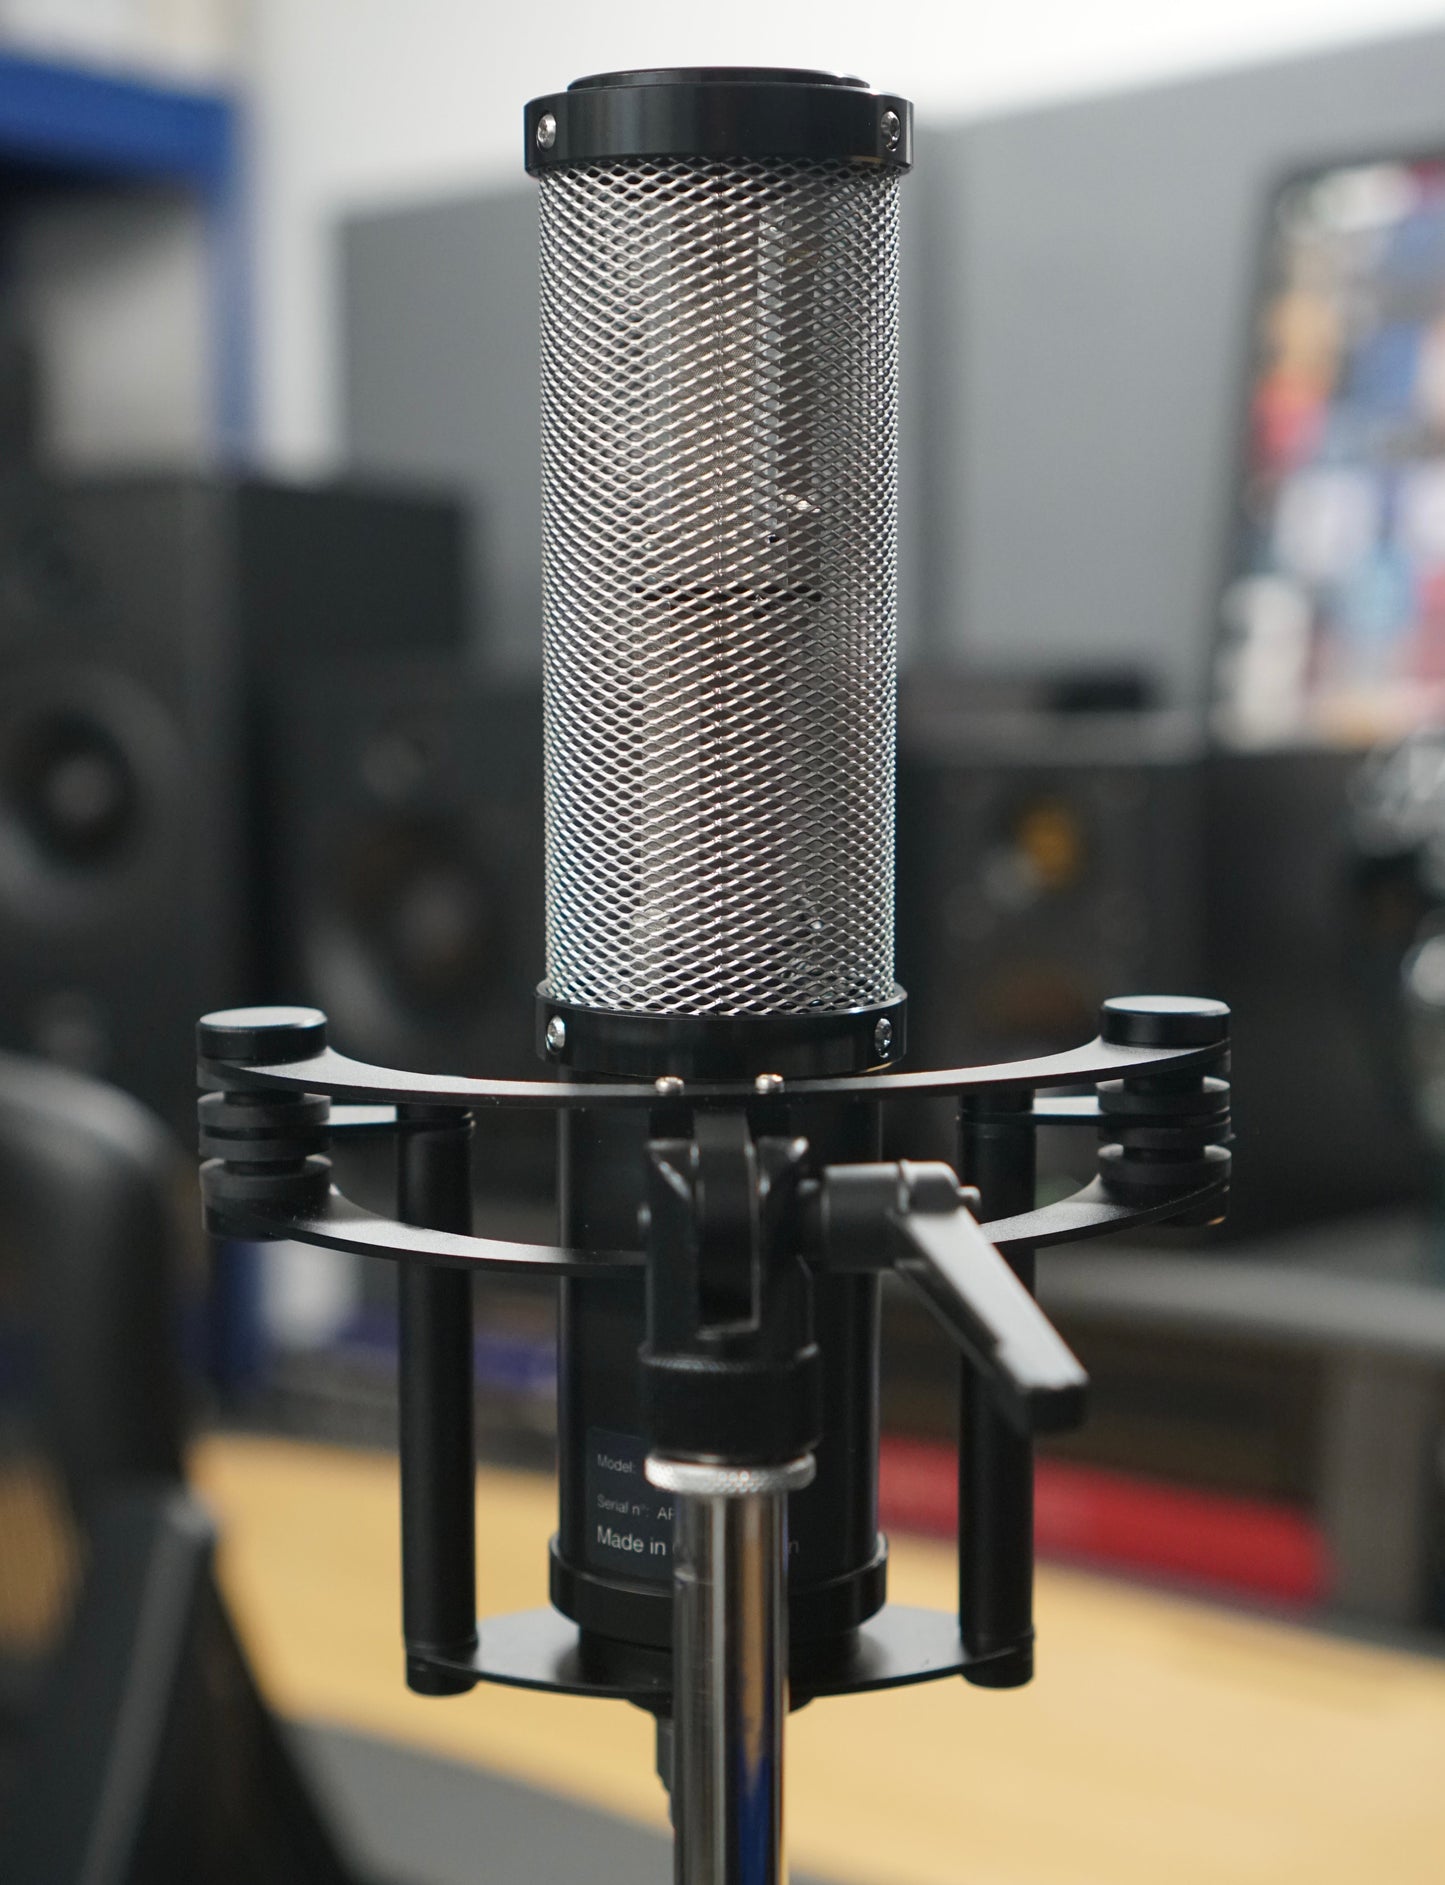 Sontronics Apollo 2 Stereo Ribbon Microphone